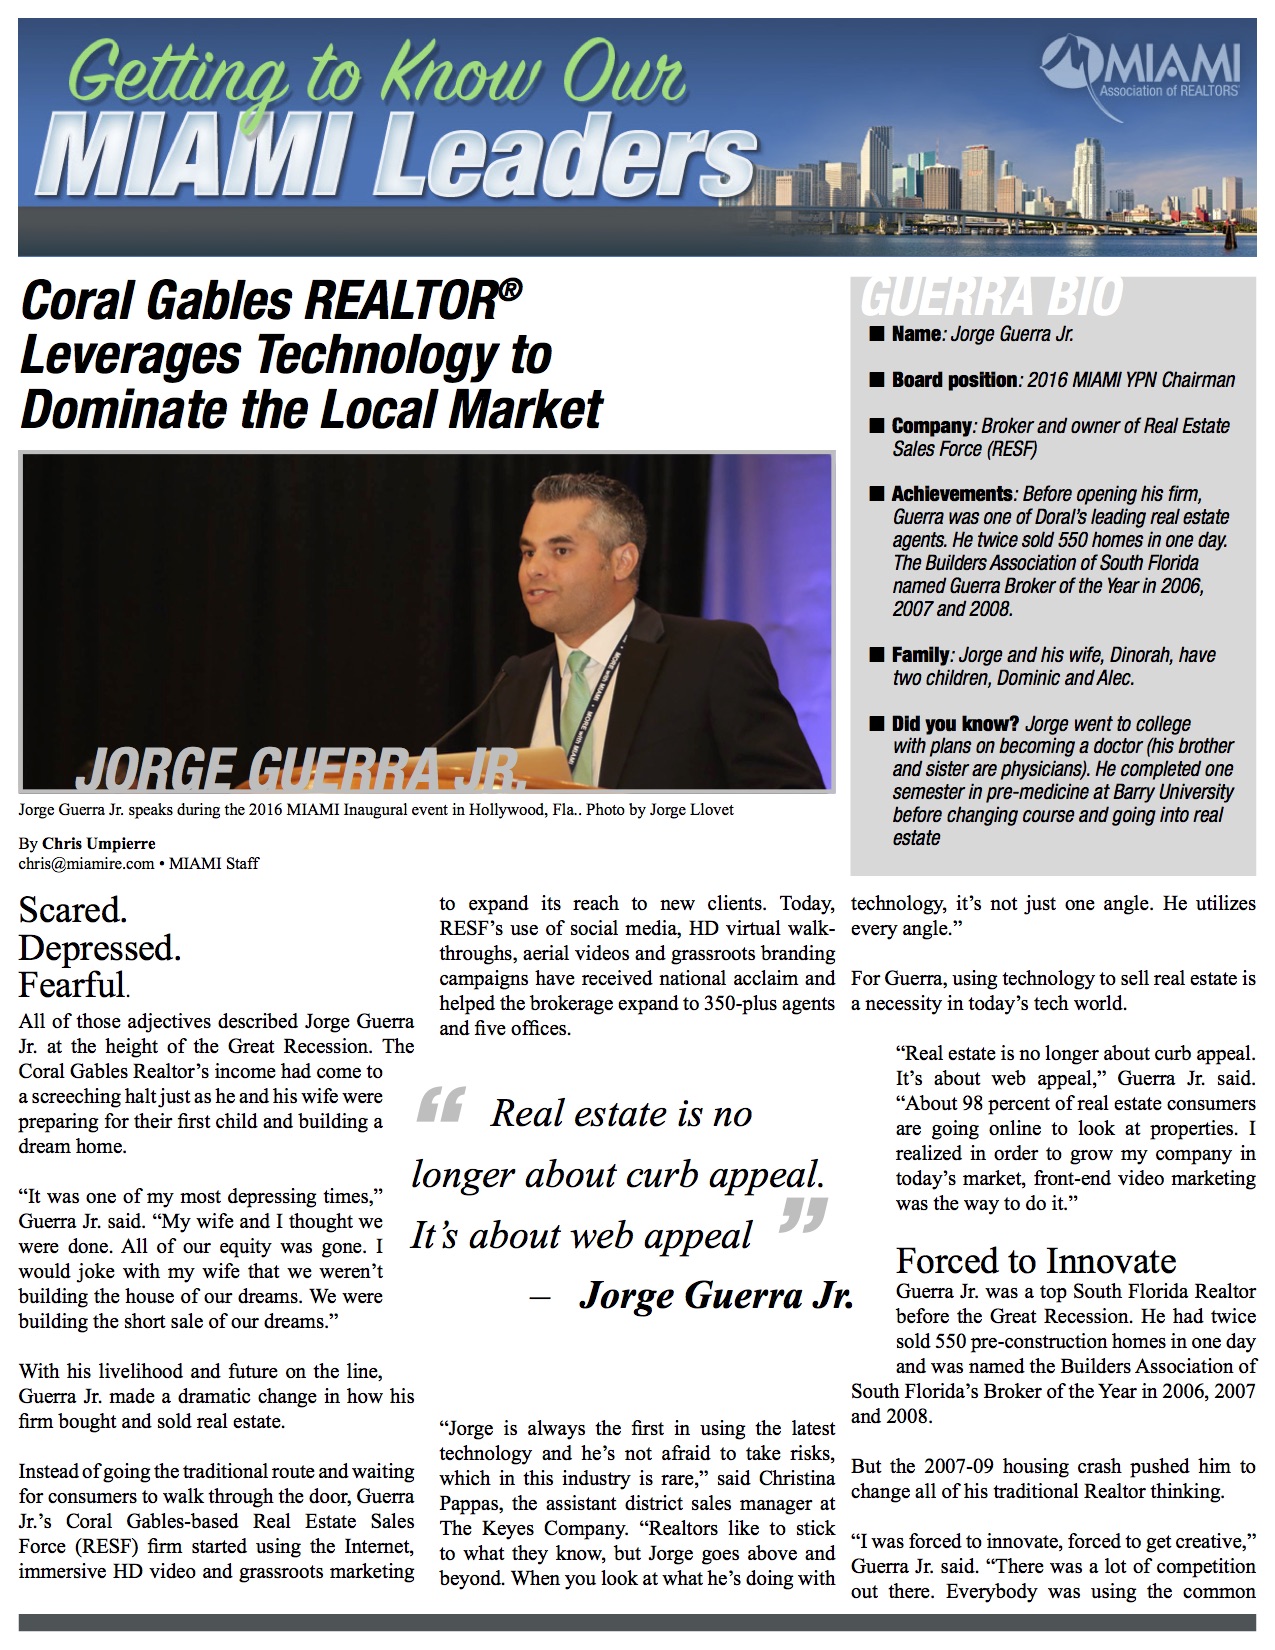 Miami Association of Realtors Leader Profile: Jorge Guerra Jr.